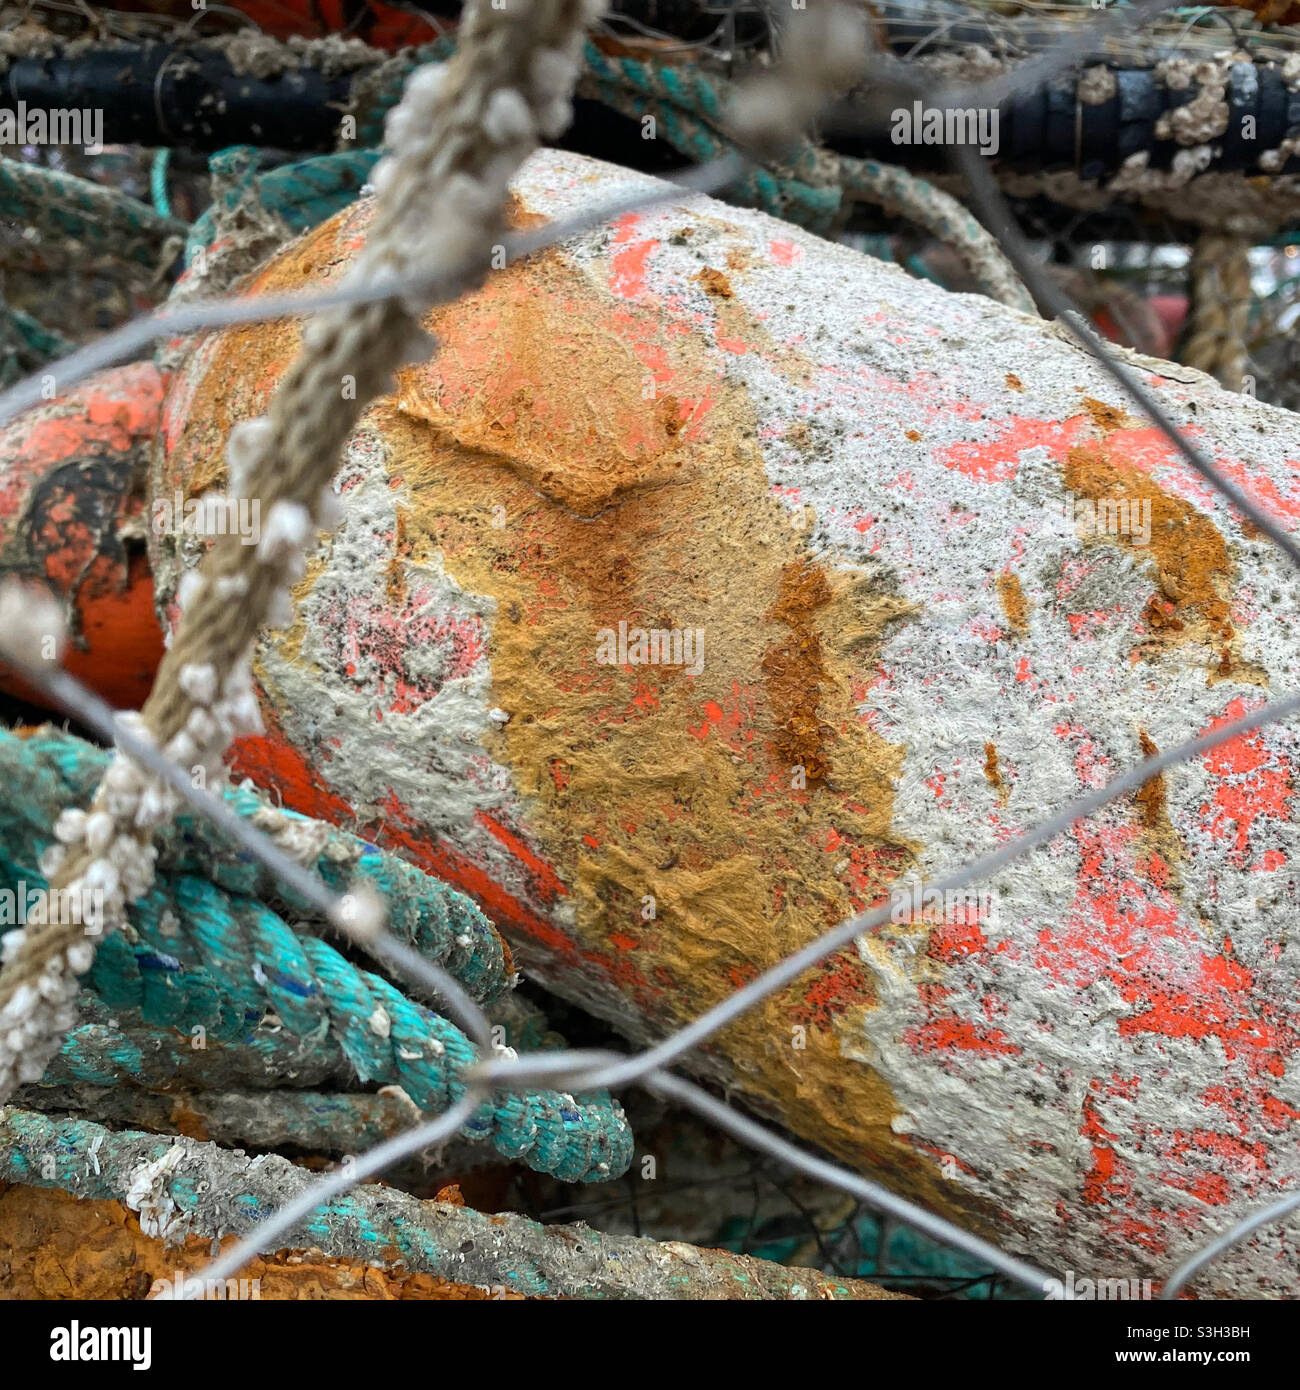 Fishing gear in crab pot Stock Photo